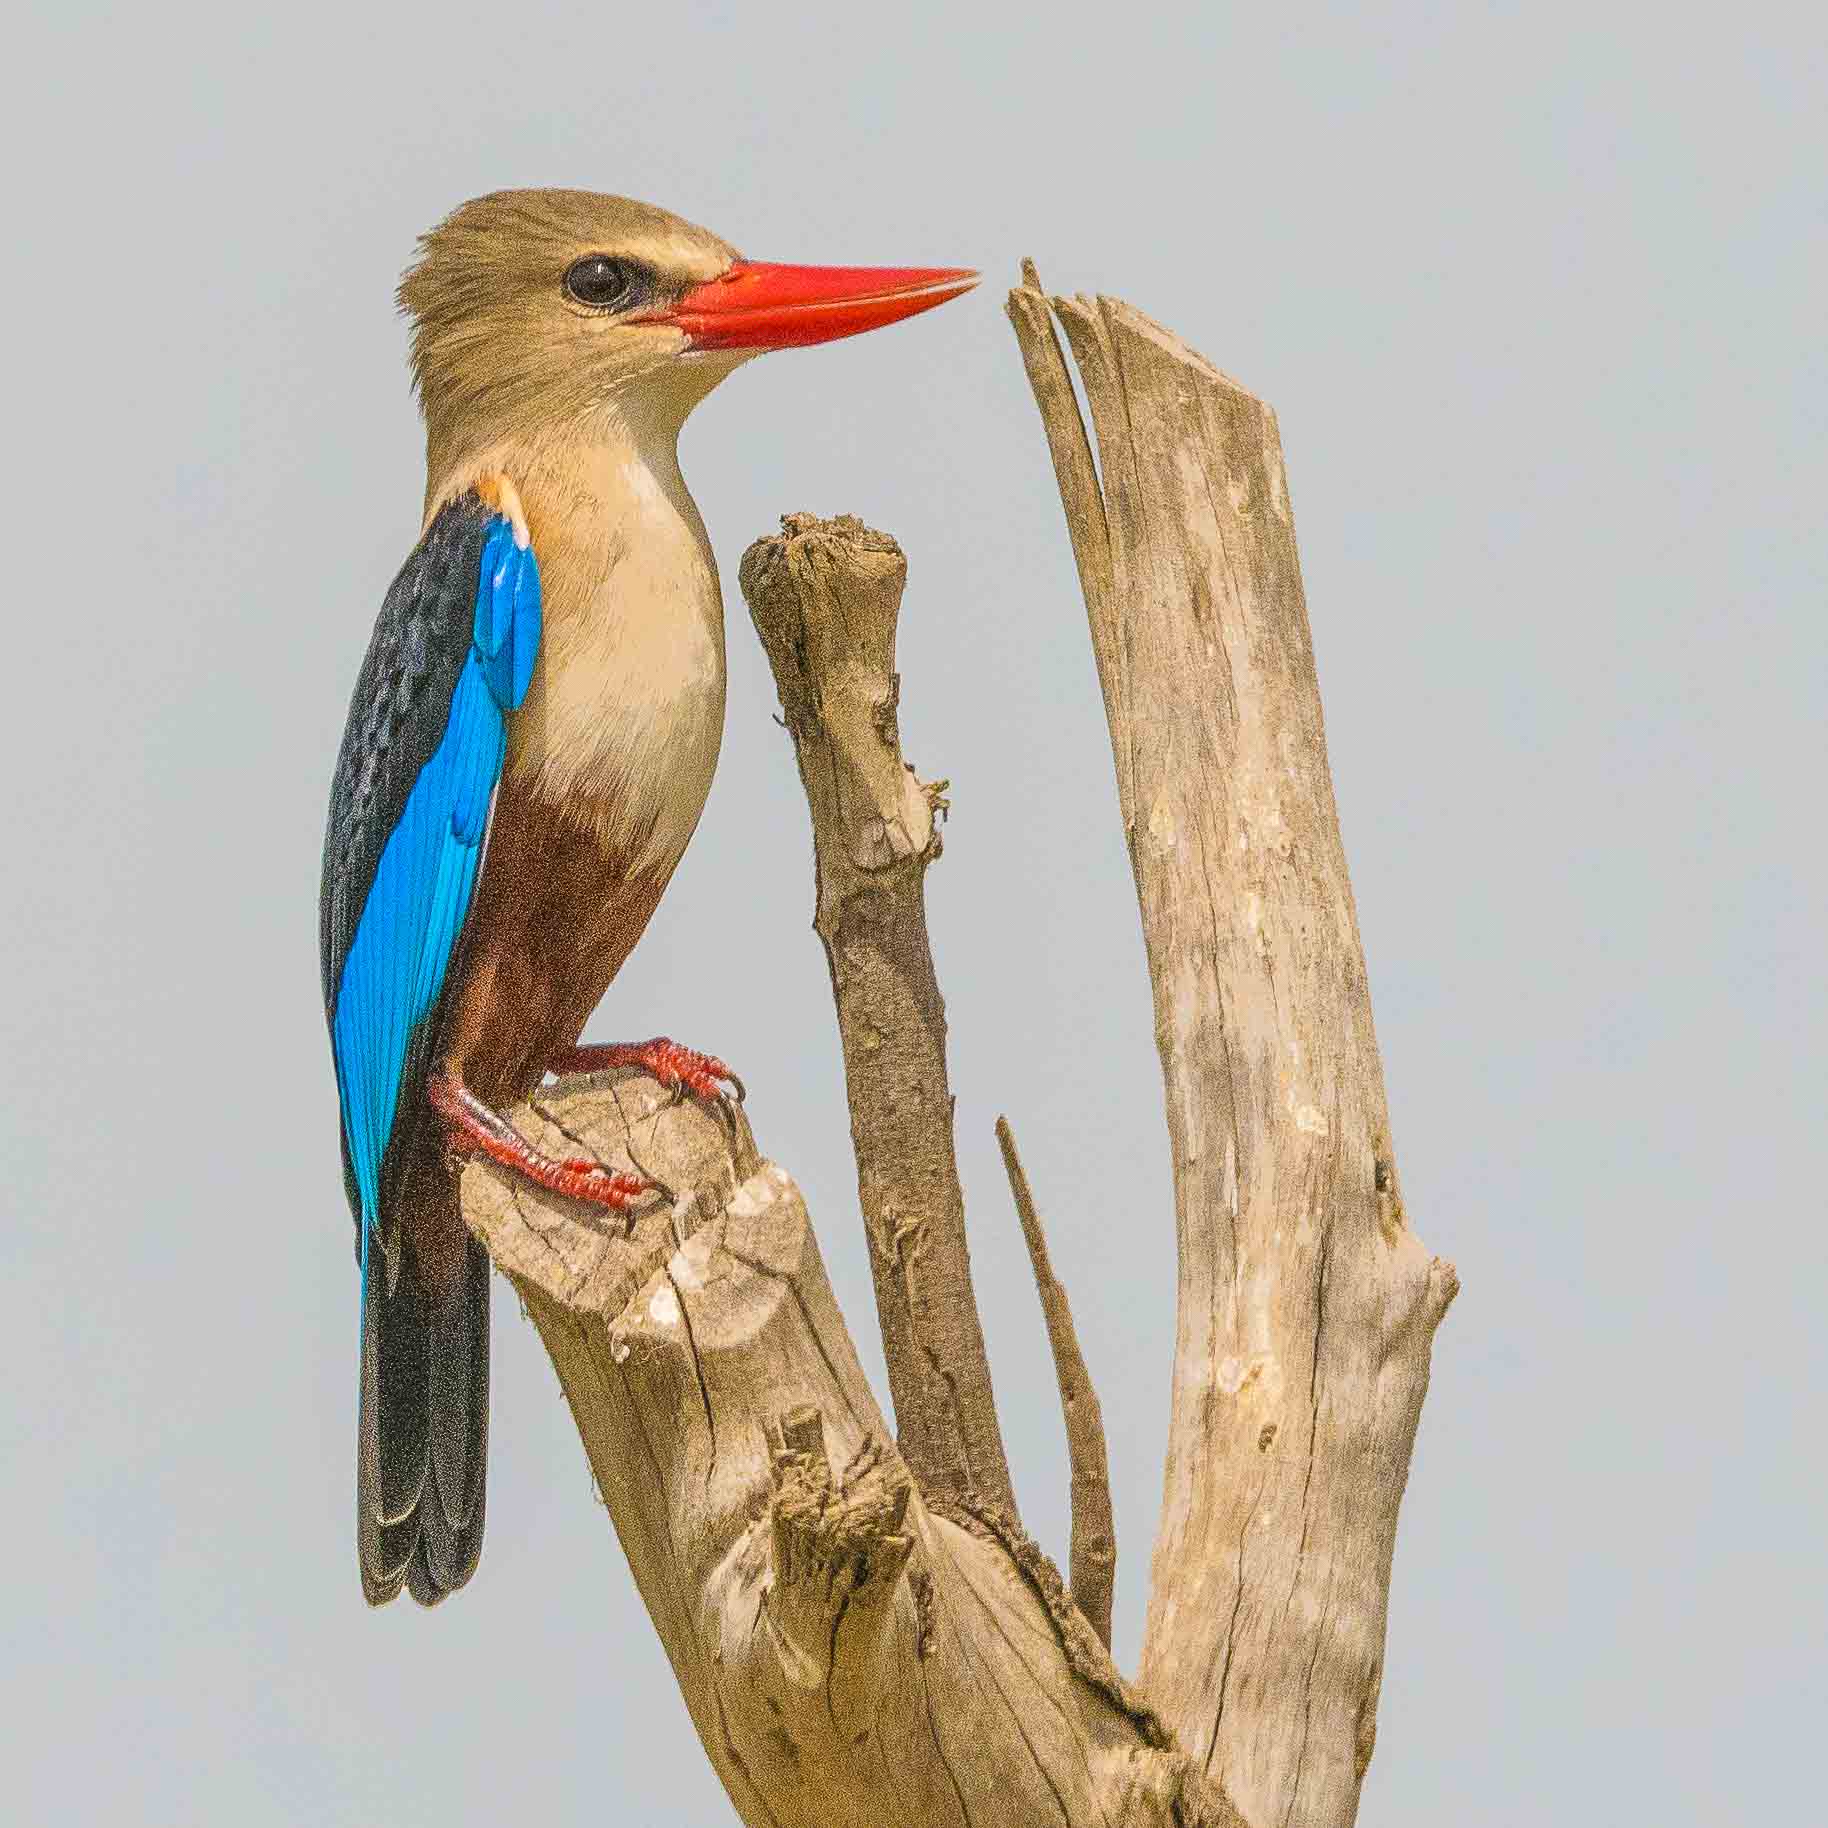 Martin-chasseur à tête grise (Grey-headed kingfisher, Halcyon leucocephala), Grande Niaye de Pikine, Dakar, Sénégal;